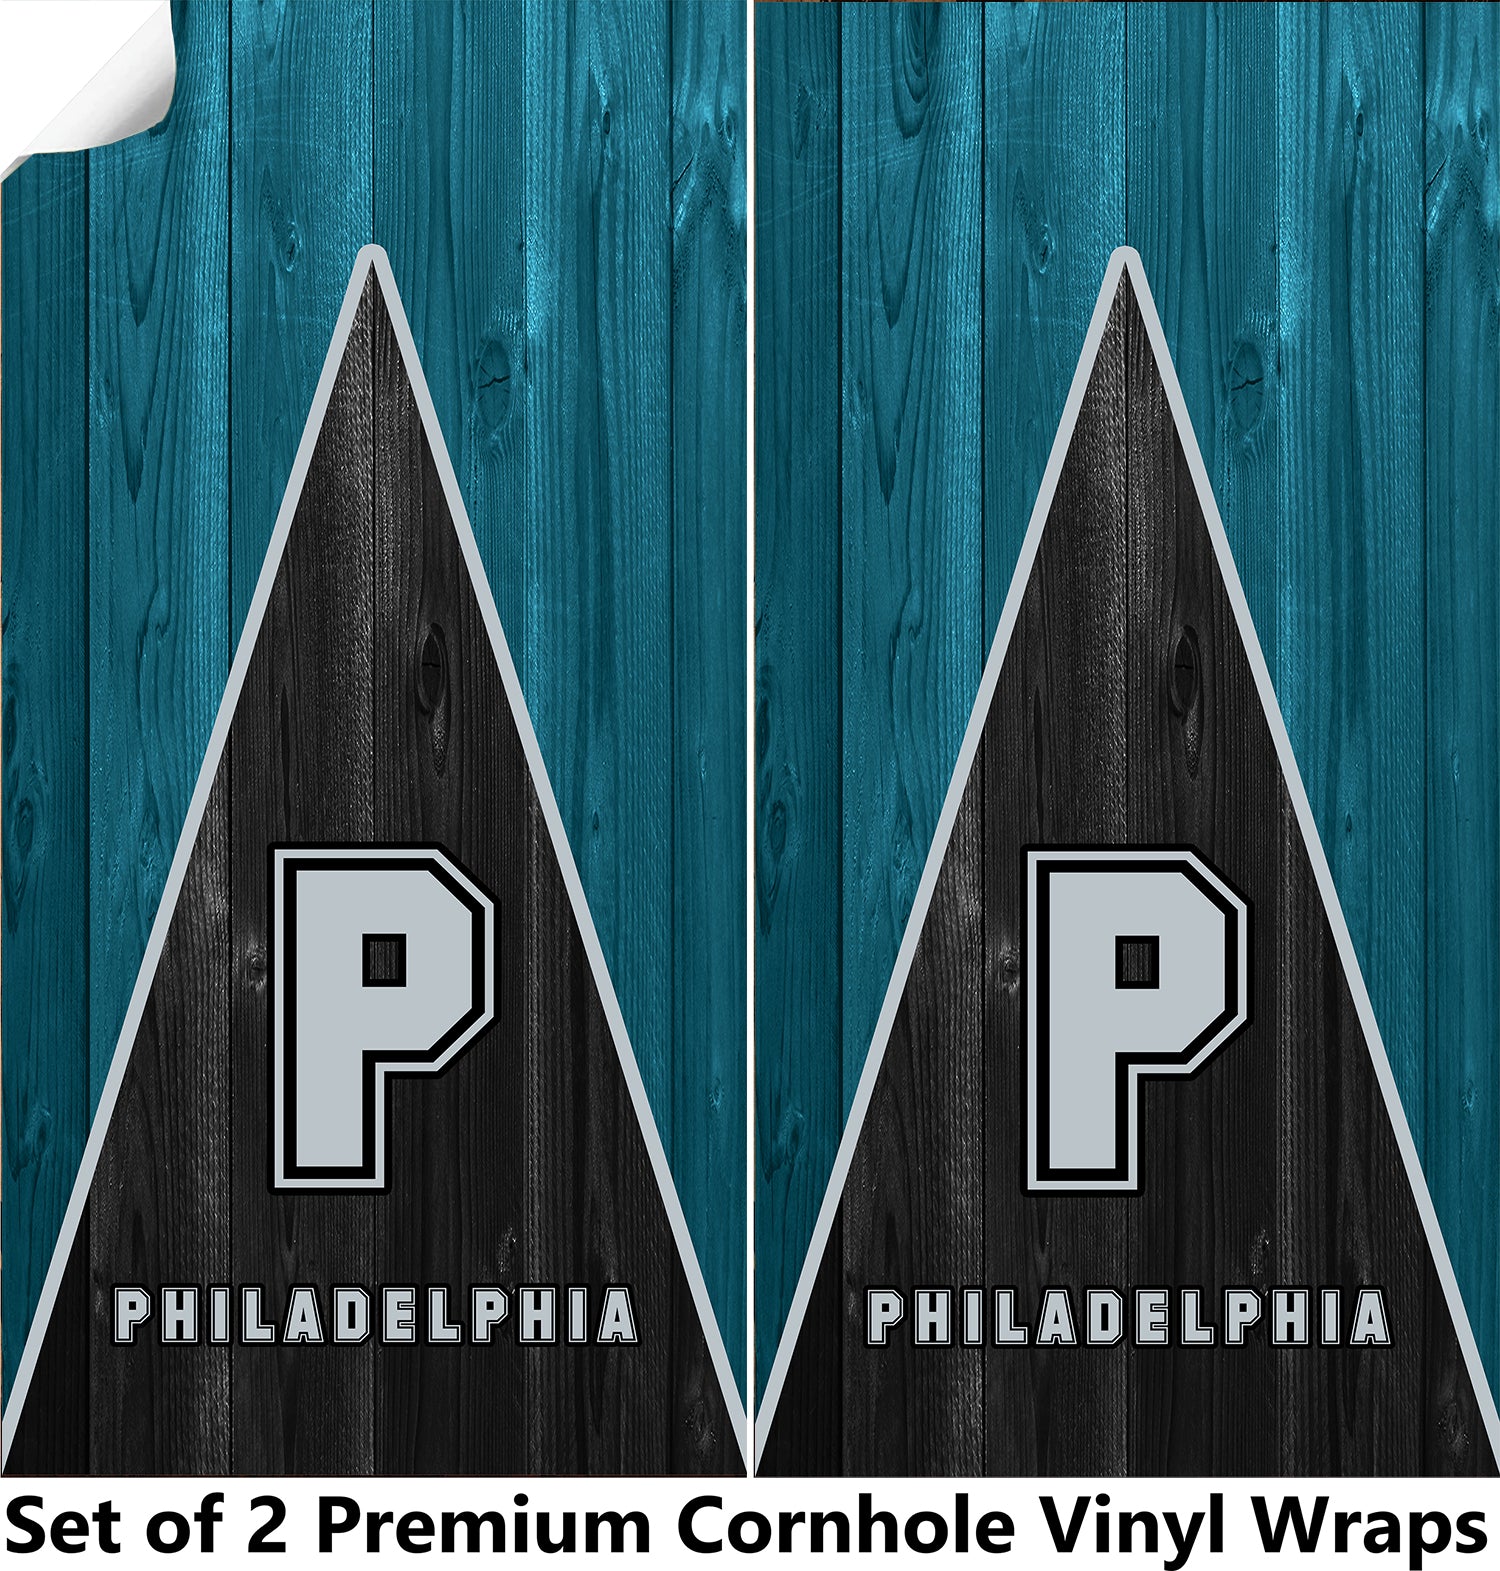 Philadelphia Cornhole Boards Wraps (Set of 2)